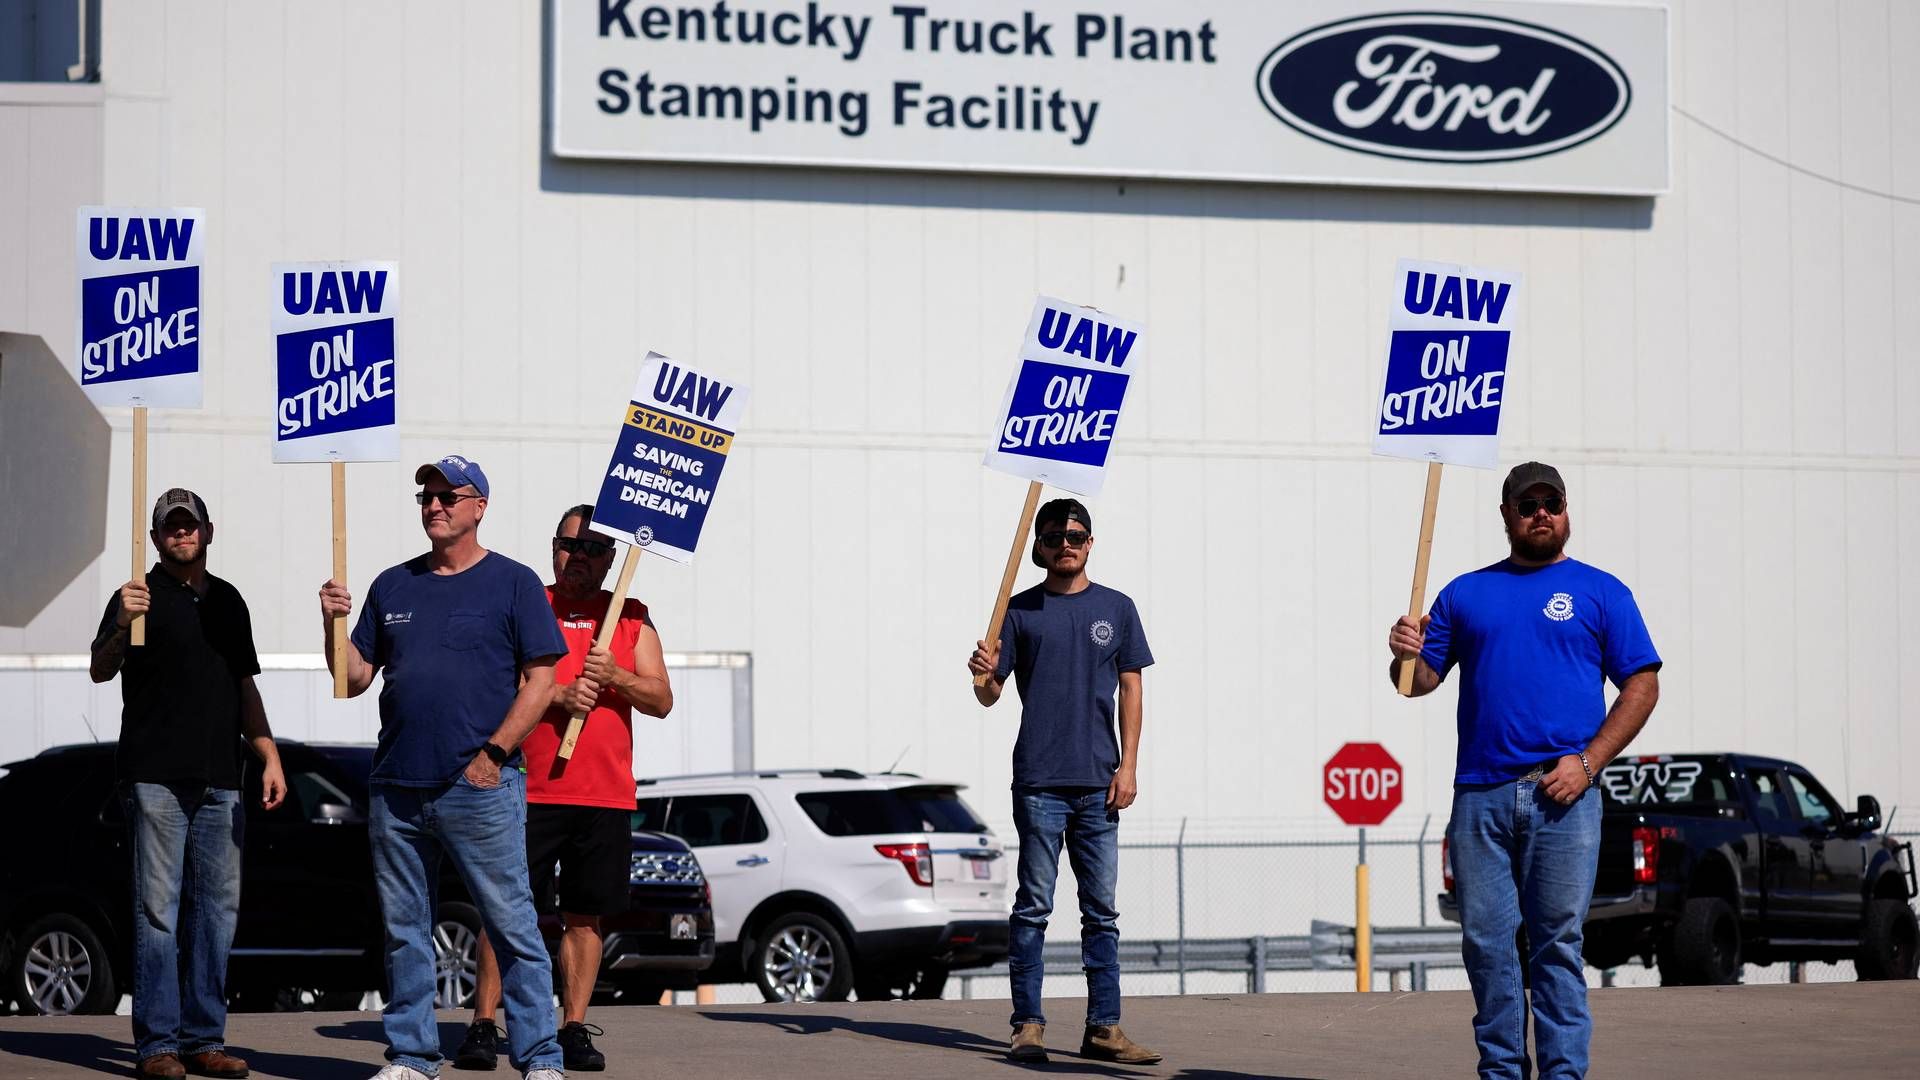 UAW-medlemmer strejker fortsat i USA. | Foto: Luke Sharrett/Reuters/Ritzau Scanpix